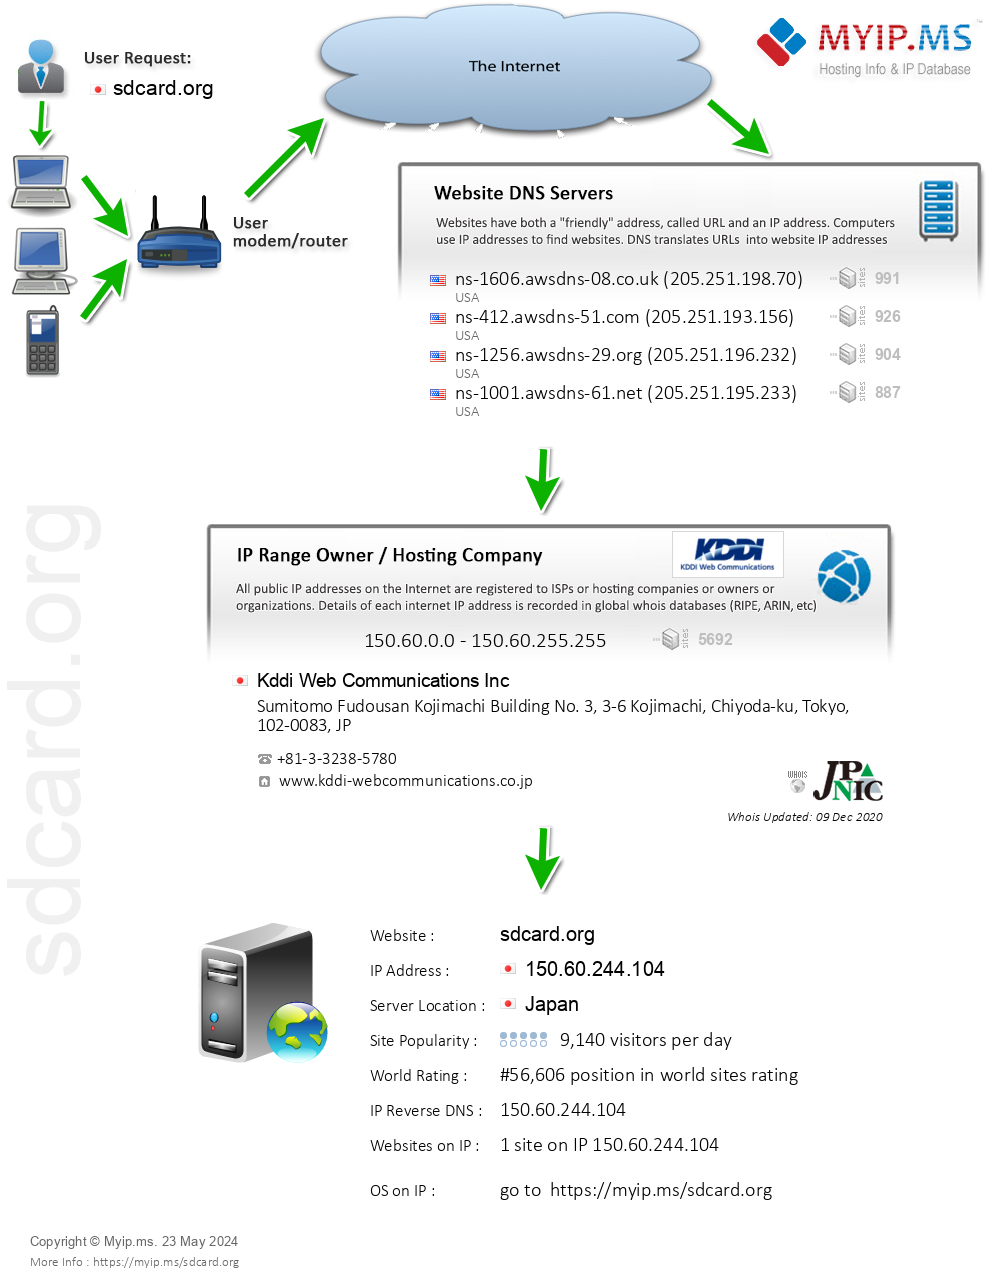 Sdcard.org - Website Hosting Visual IP Diagram